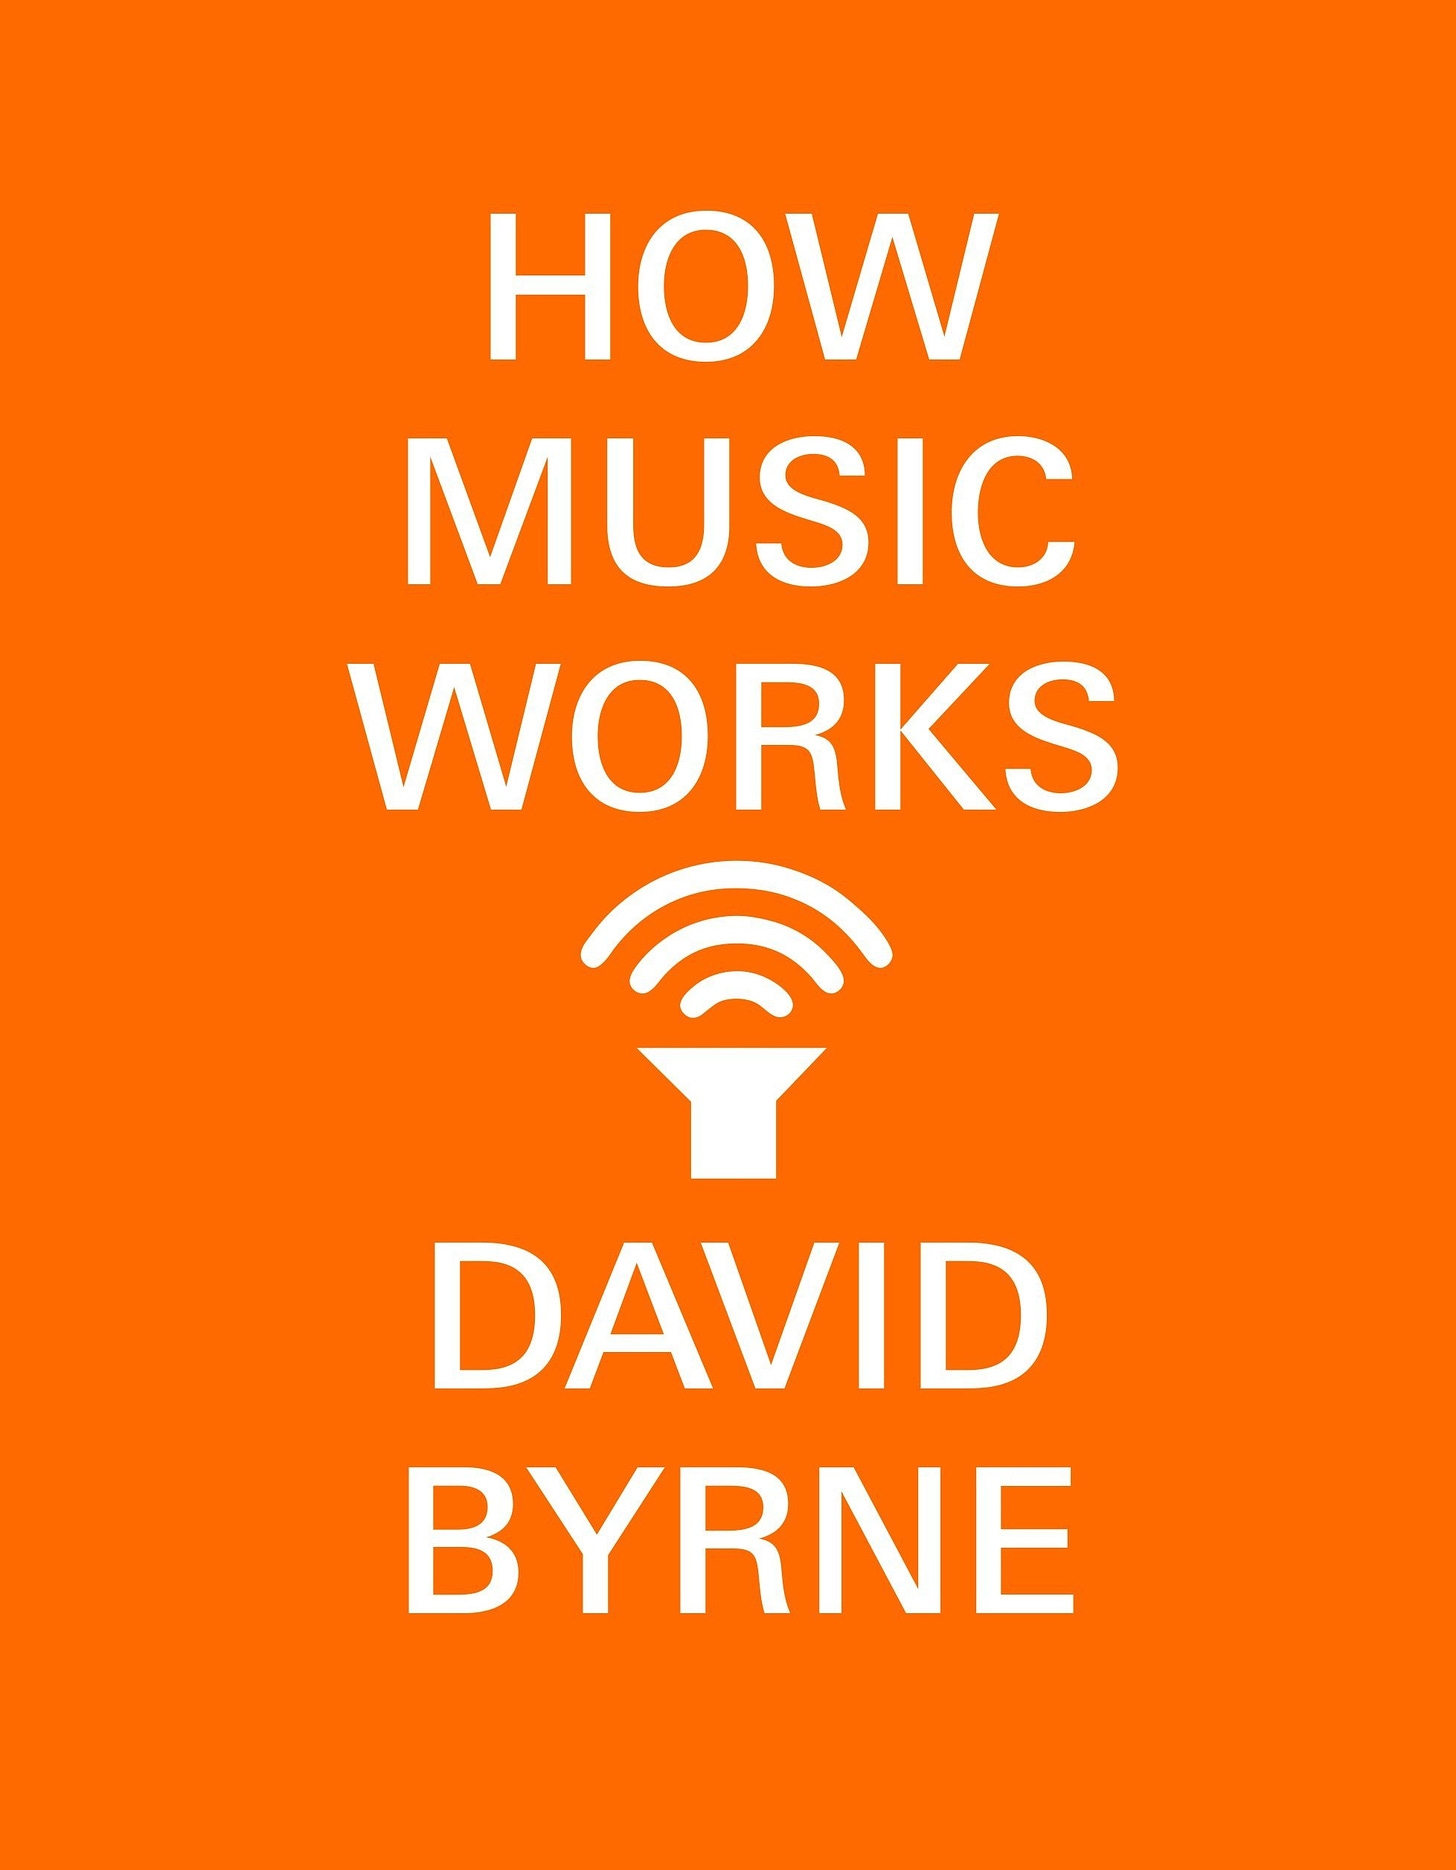 How Music Works : Byrne, David: Amazon.fr: Livres